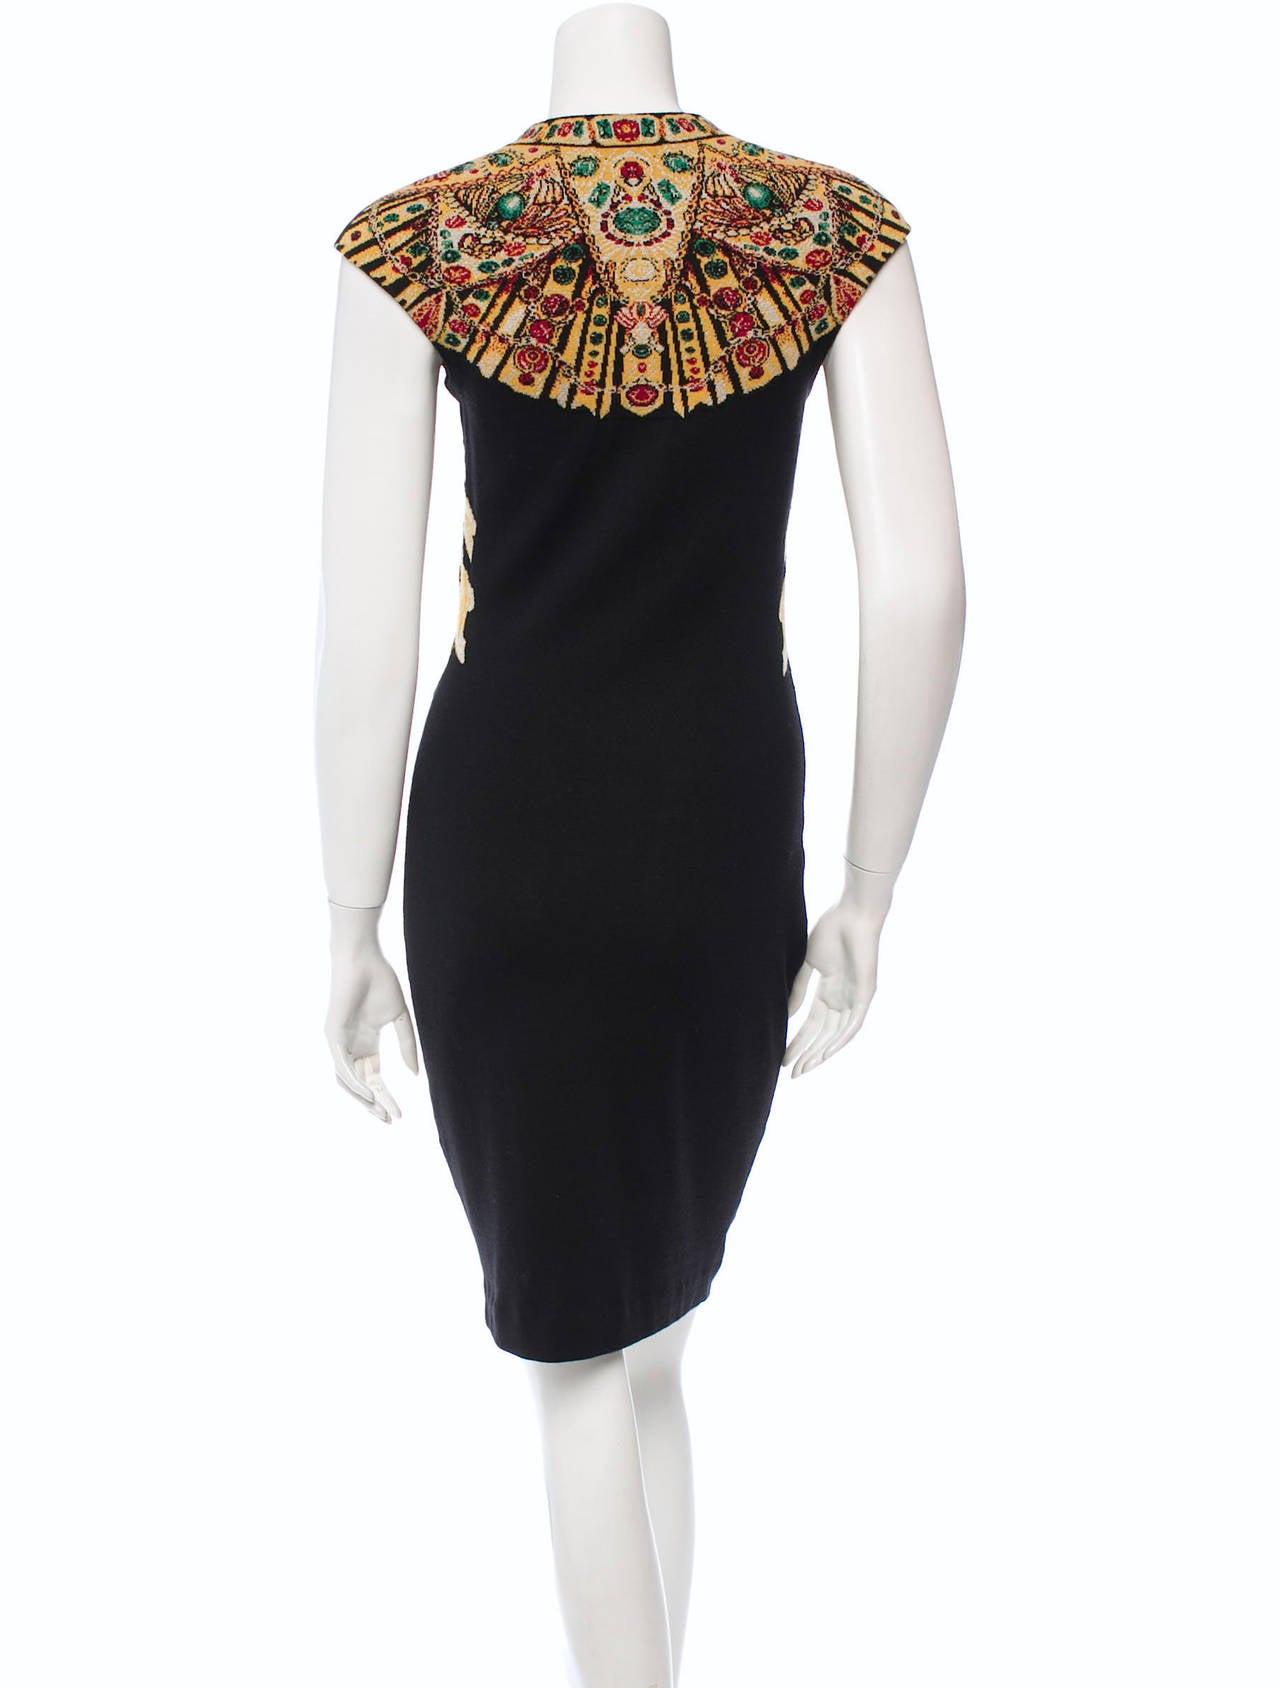 Women's Alexander McQueen Jeweled Knit Dress, Fall/Winter 2010 Collection